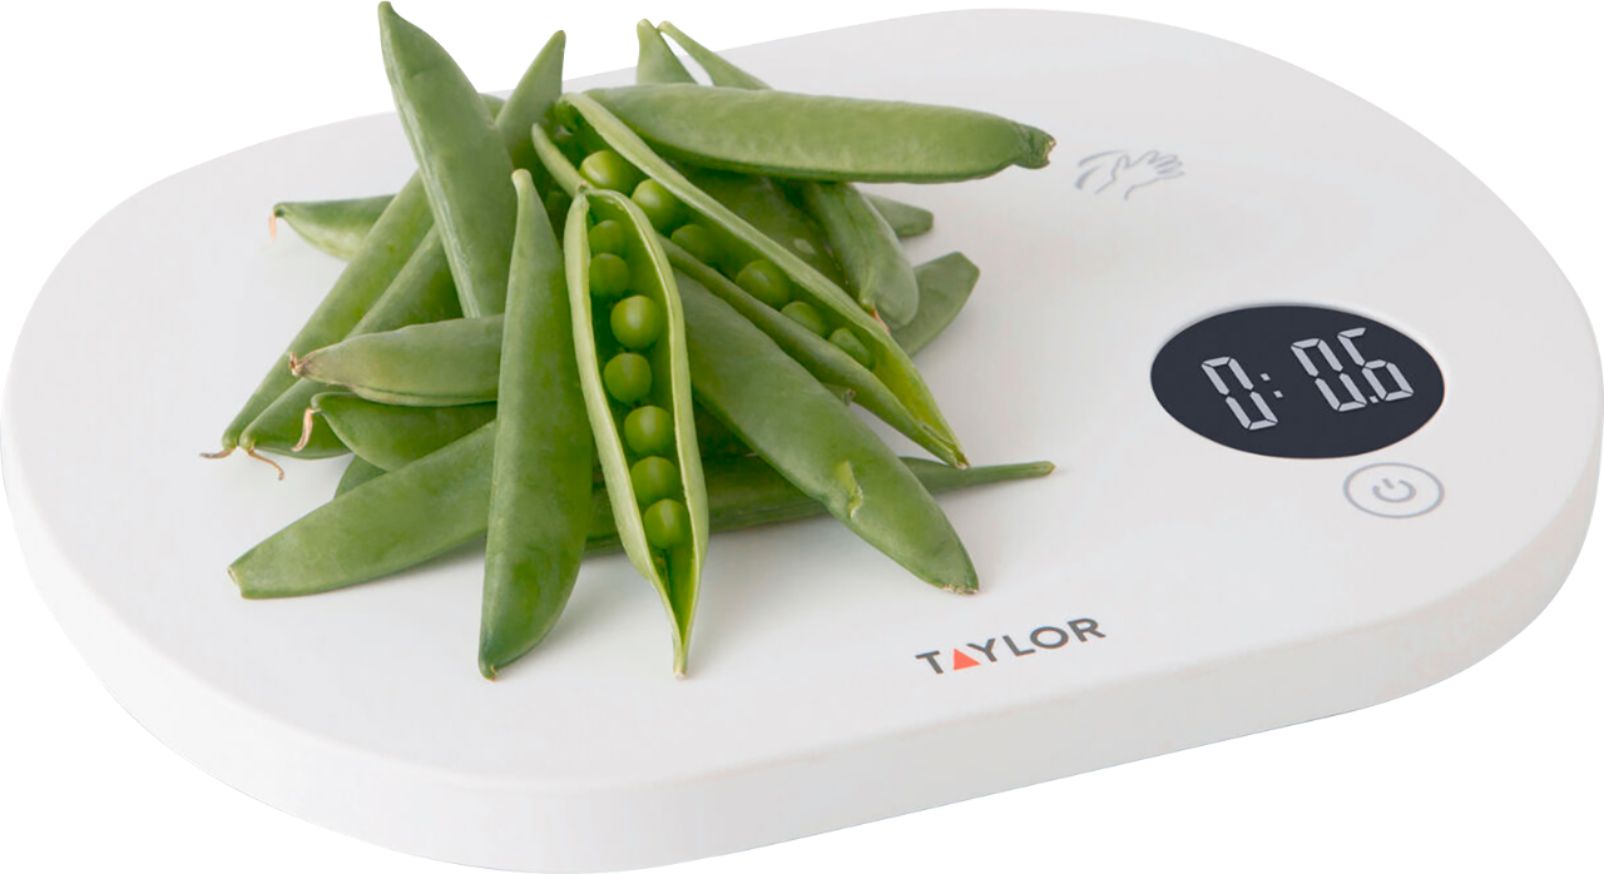 Taylor Digital Waterproof Kitchen Food Scale, White New